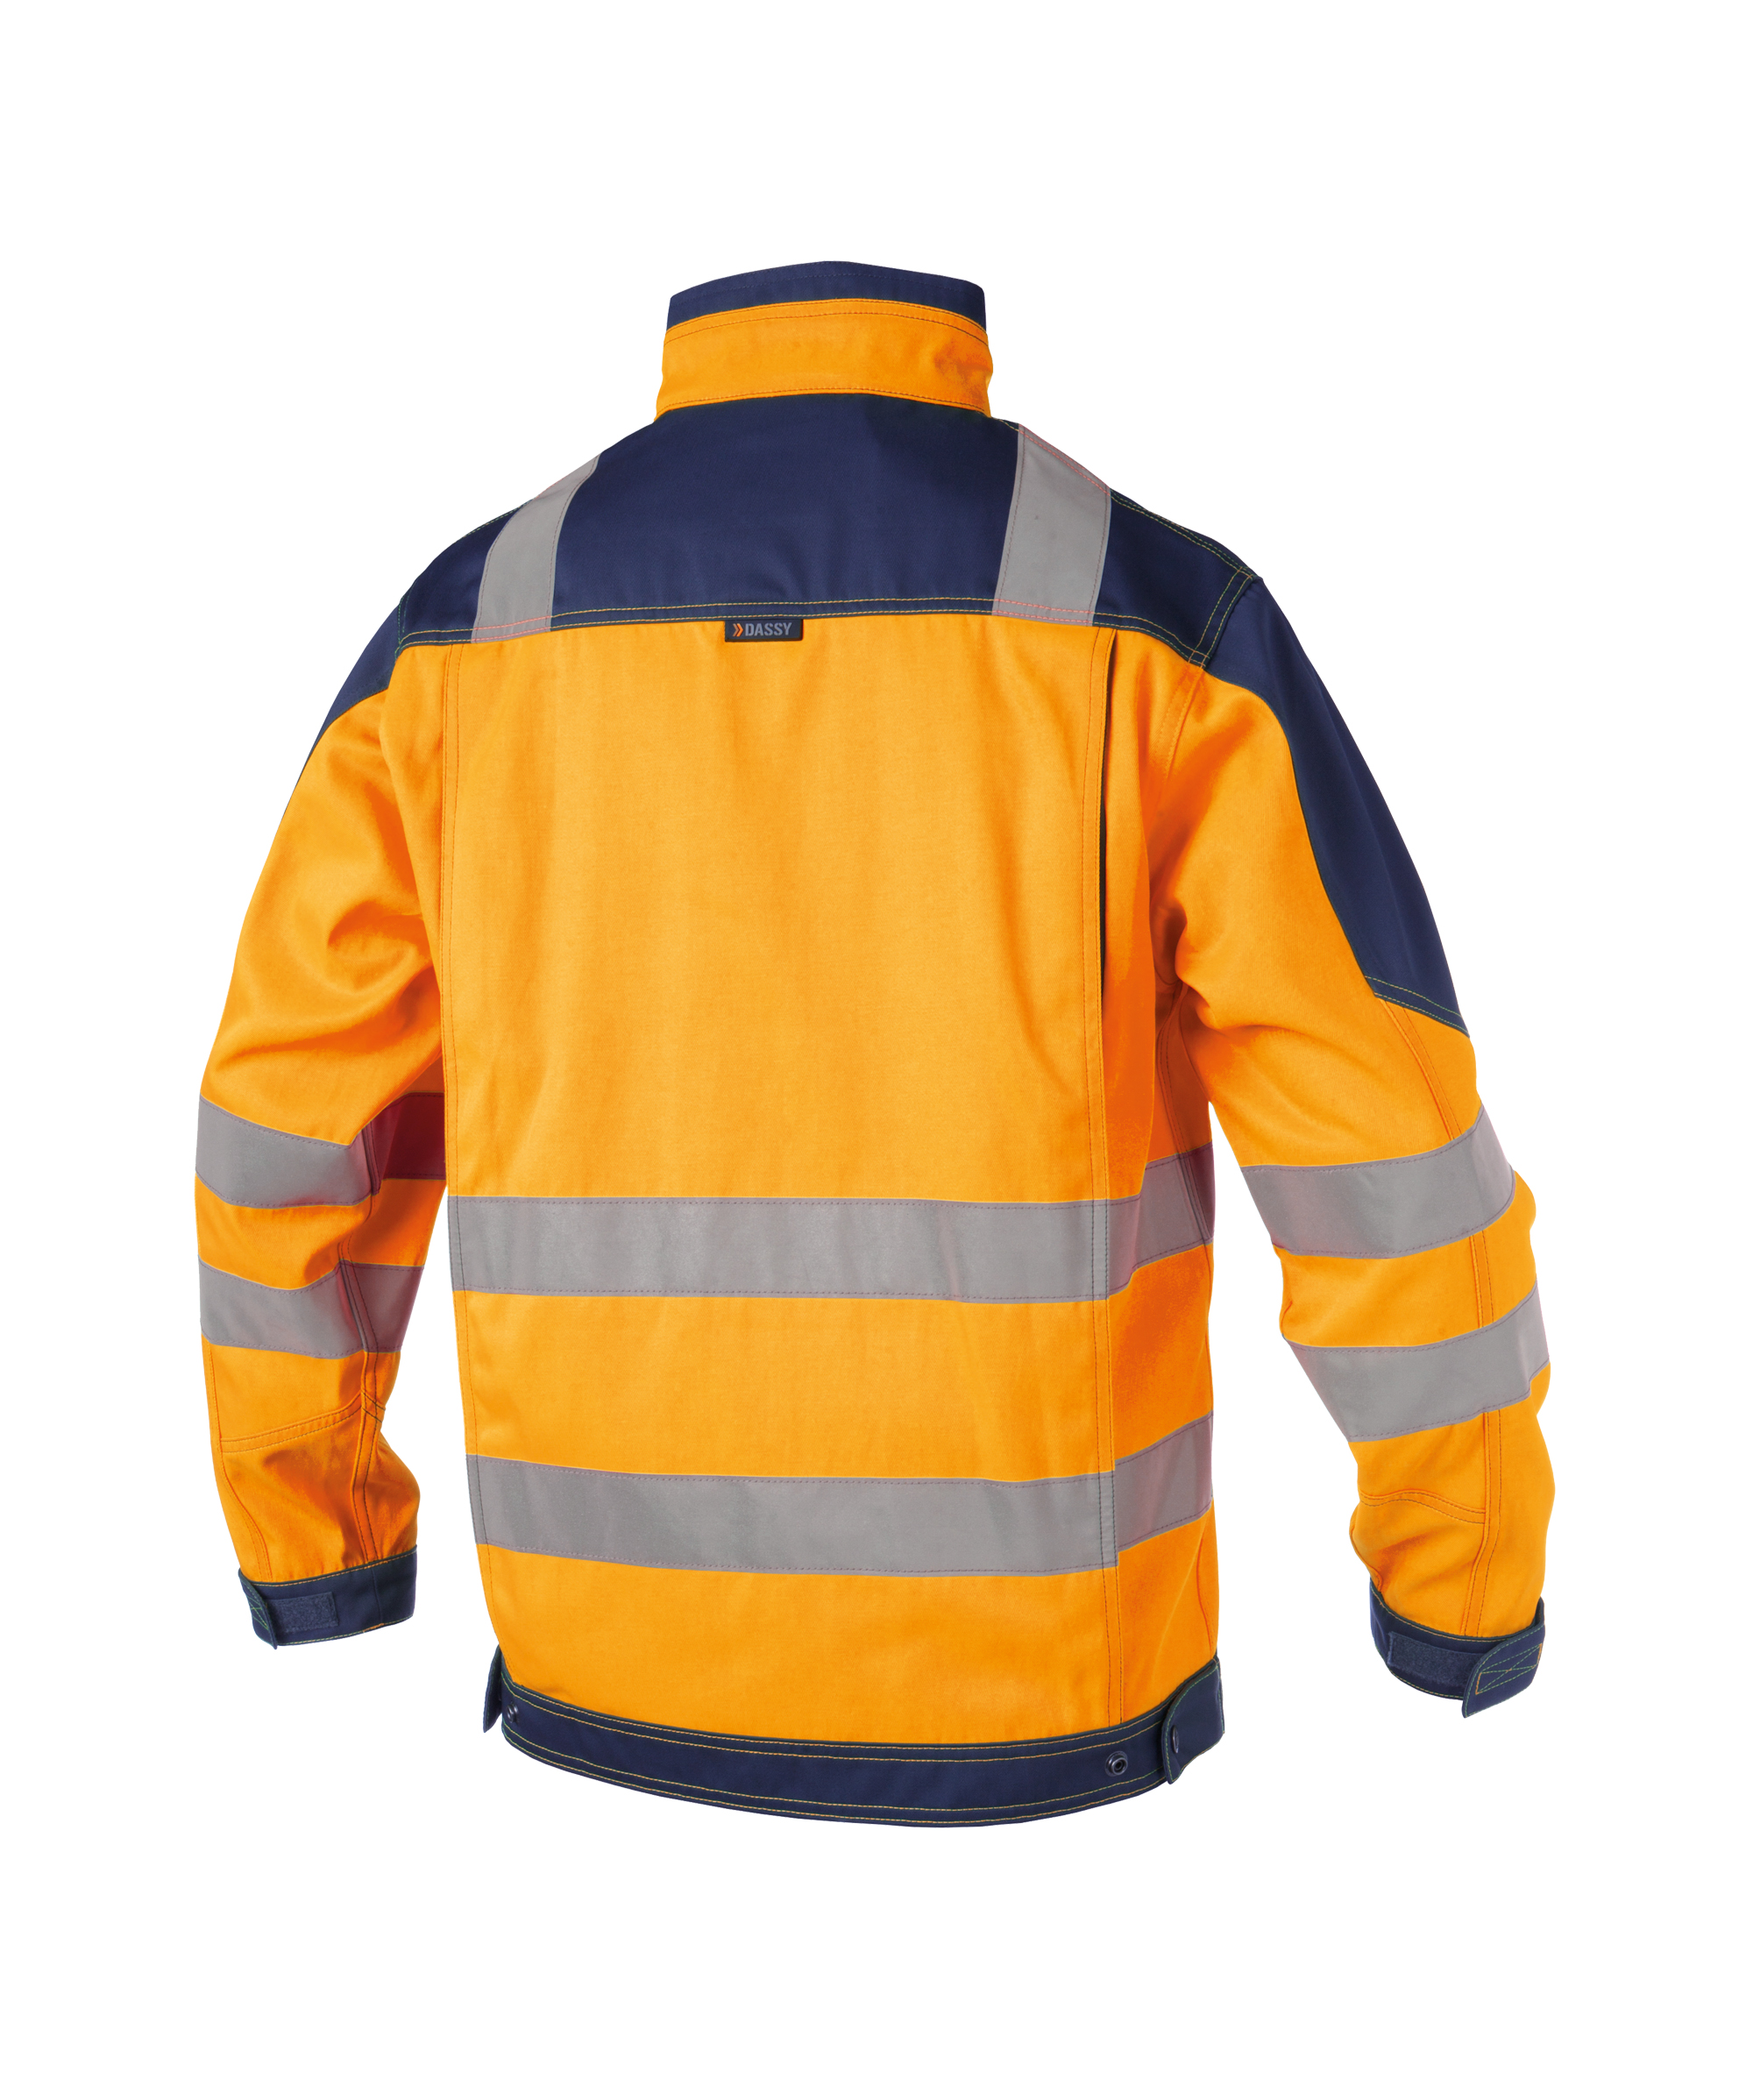 orlando_high-visibility-work-jacket_fluo-orange-navy_back.jpg